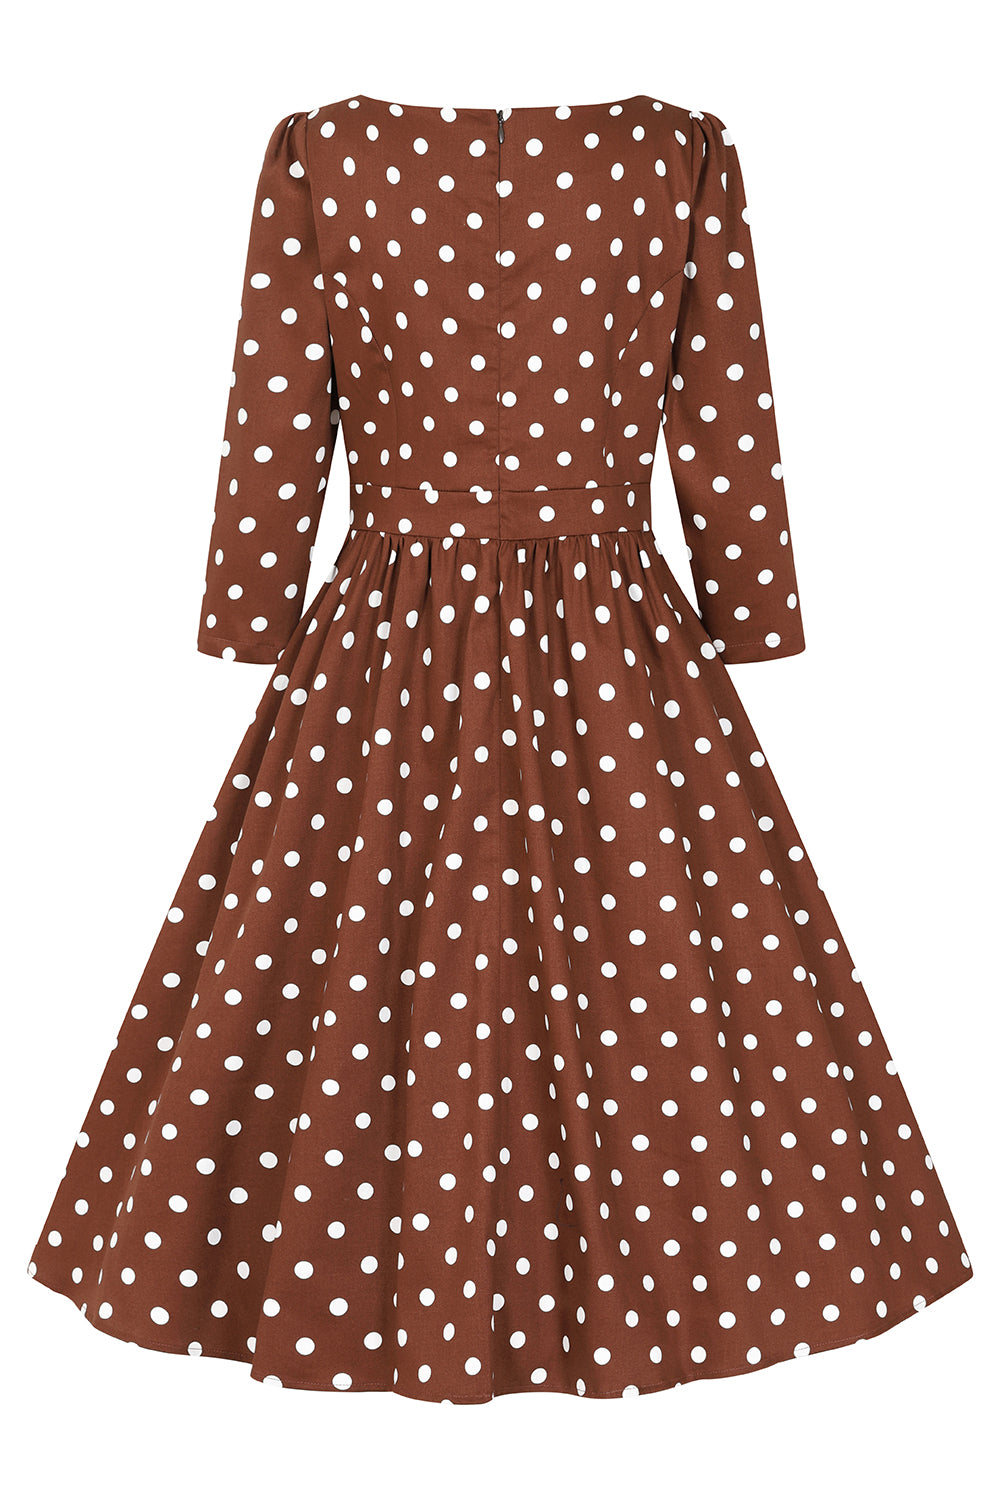 H&R London 50's Milan Polka Dot 3 Quarter Sleeve Swing Dress